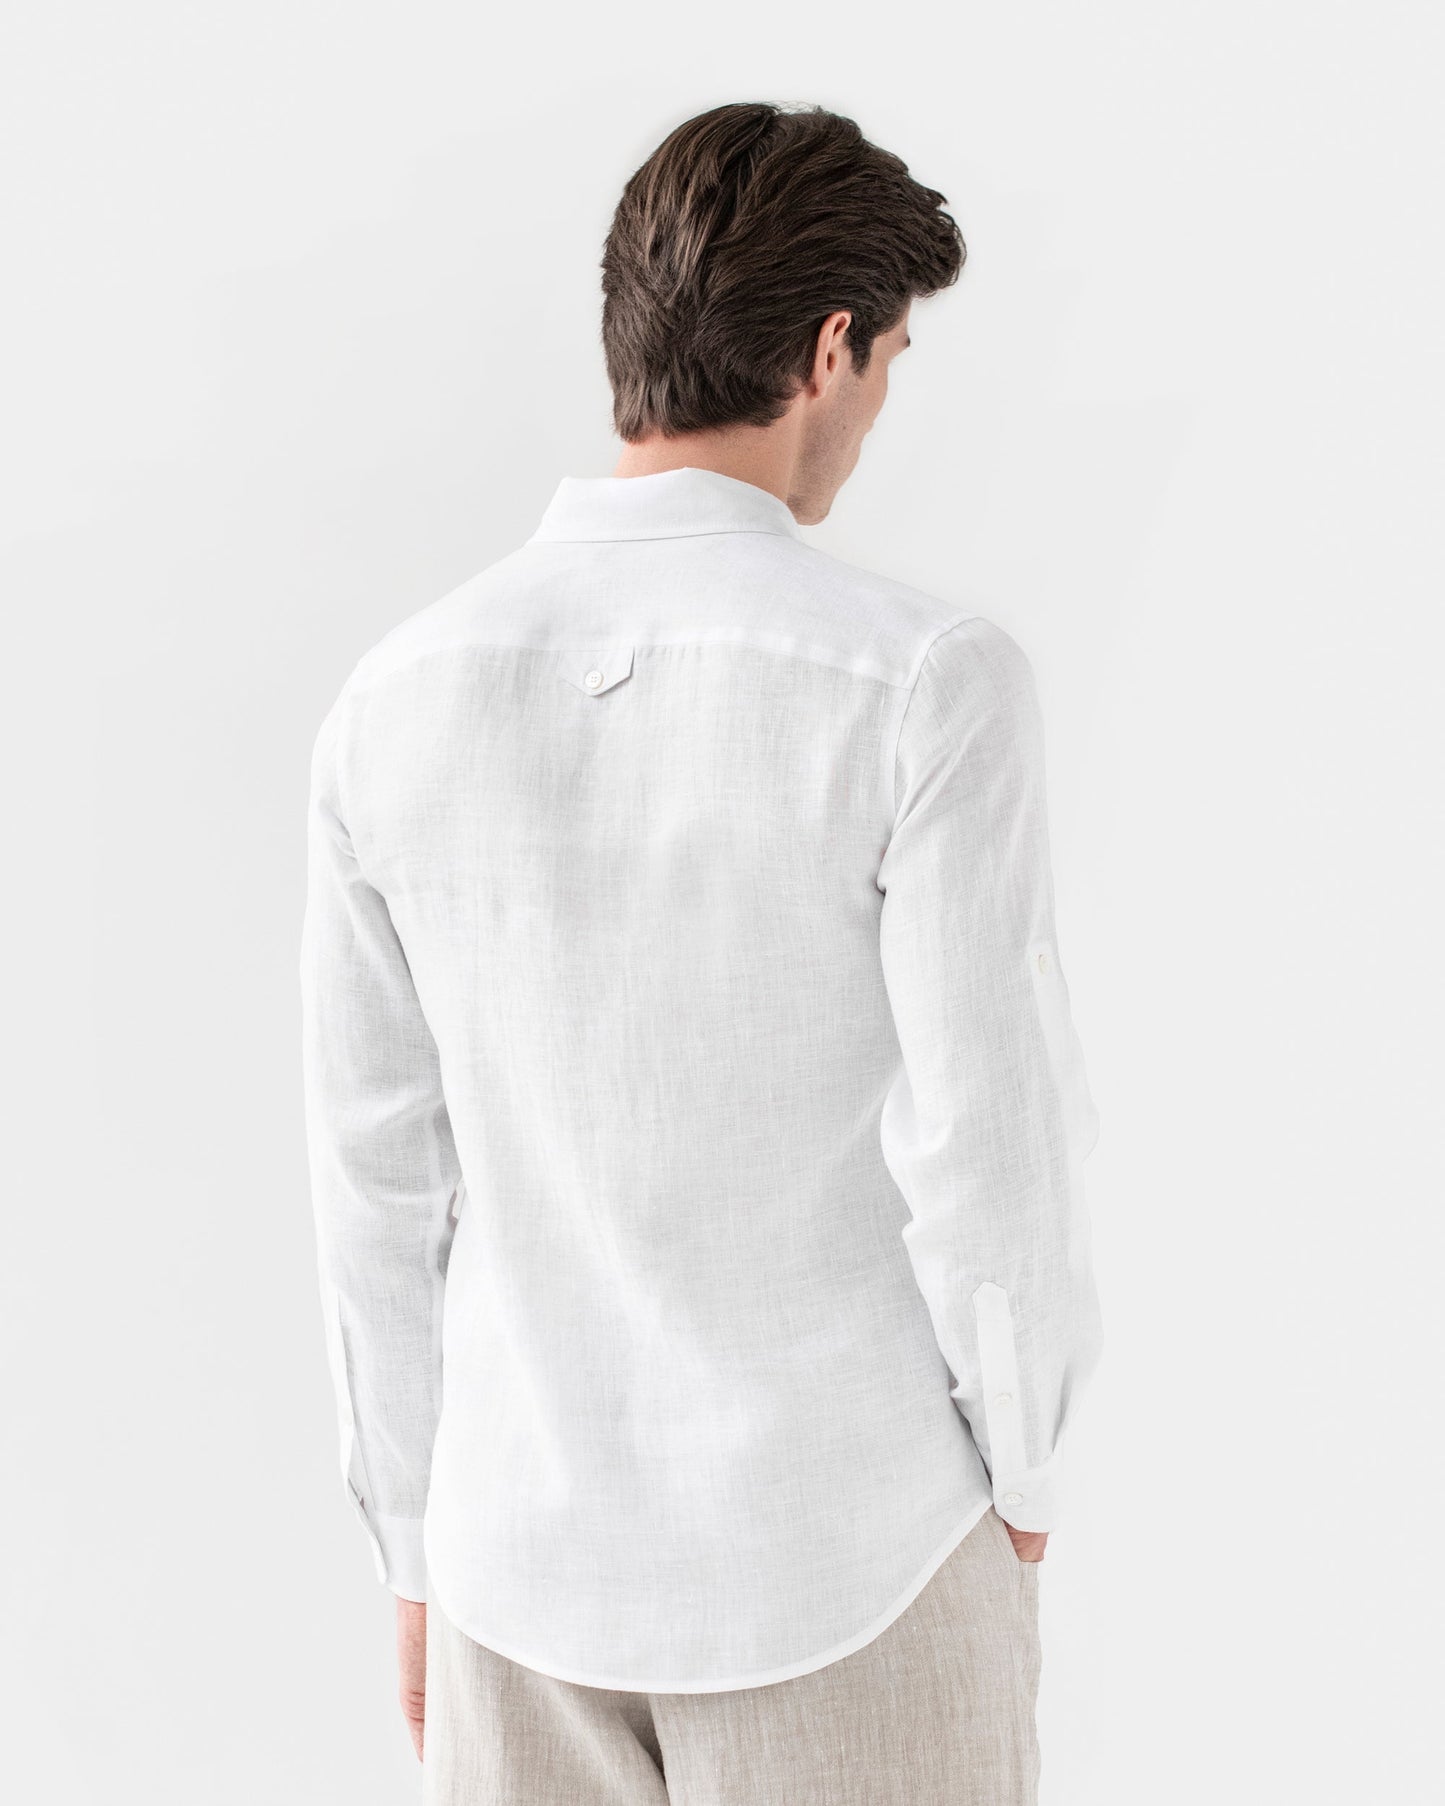 Men's Linen Shirt CORONADO in White